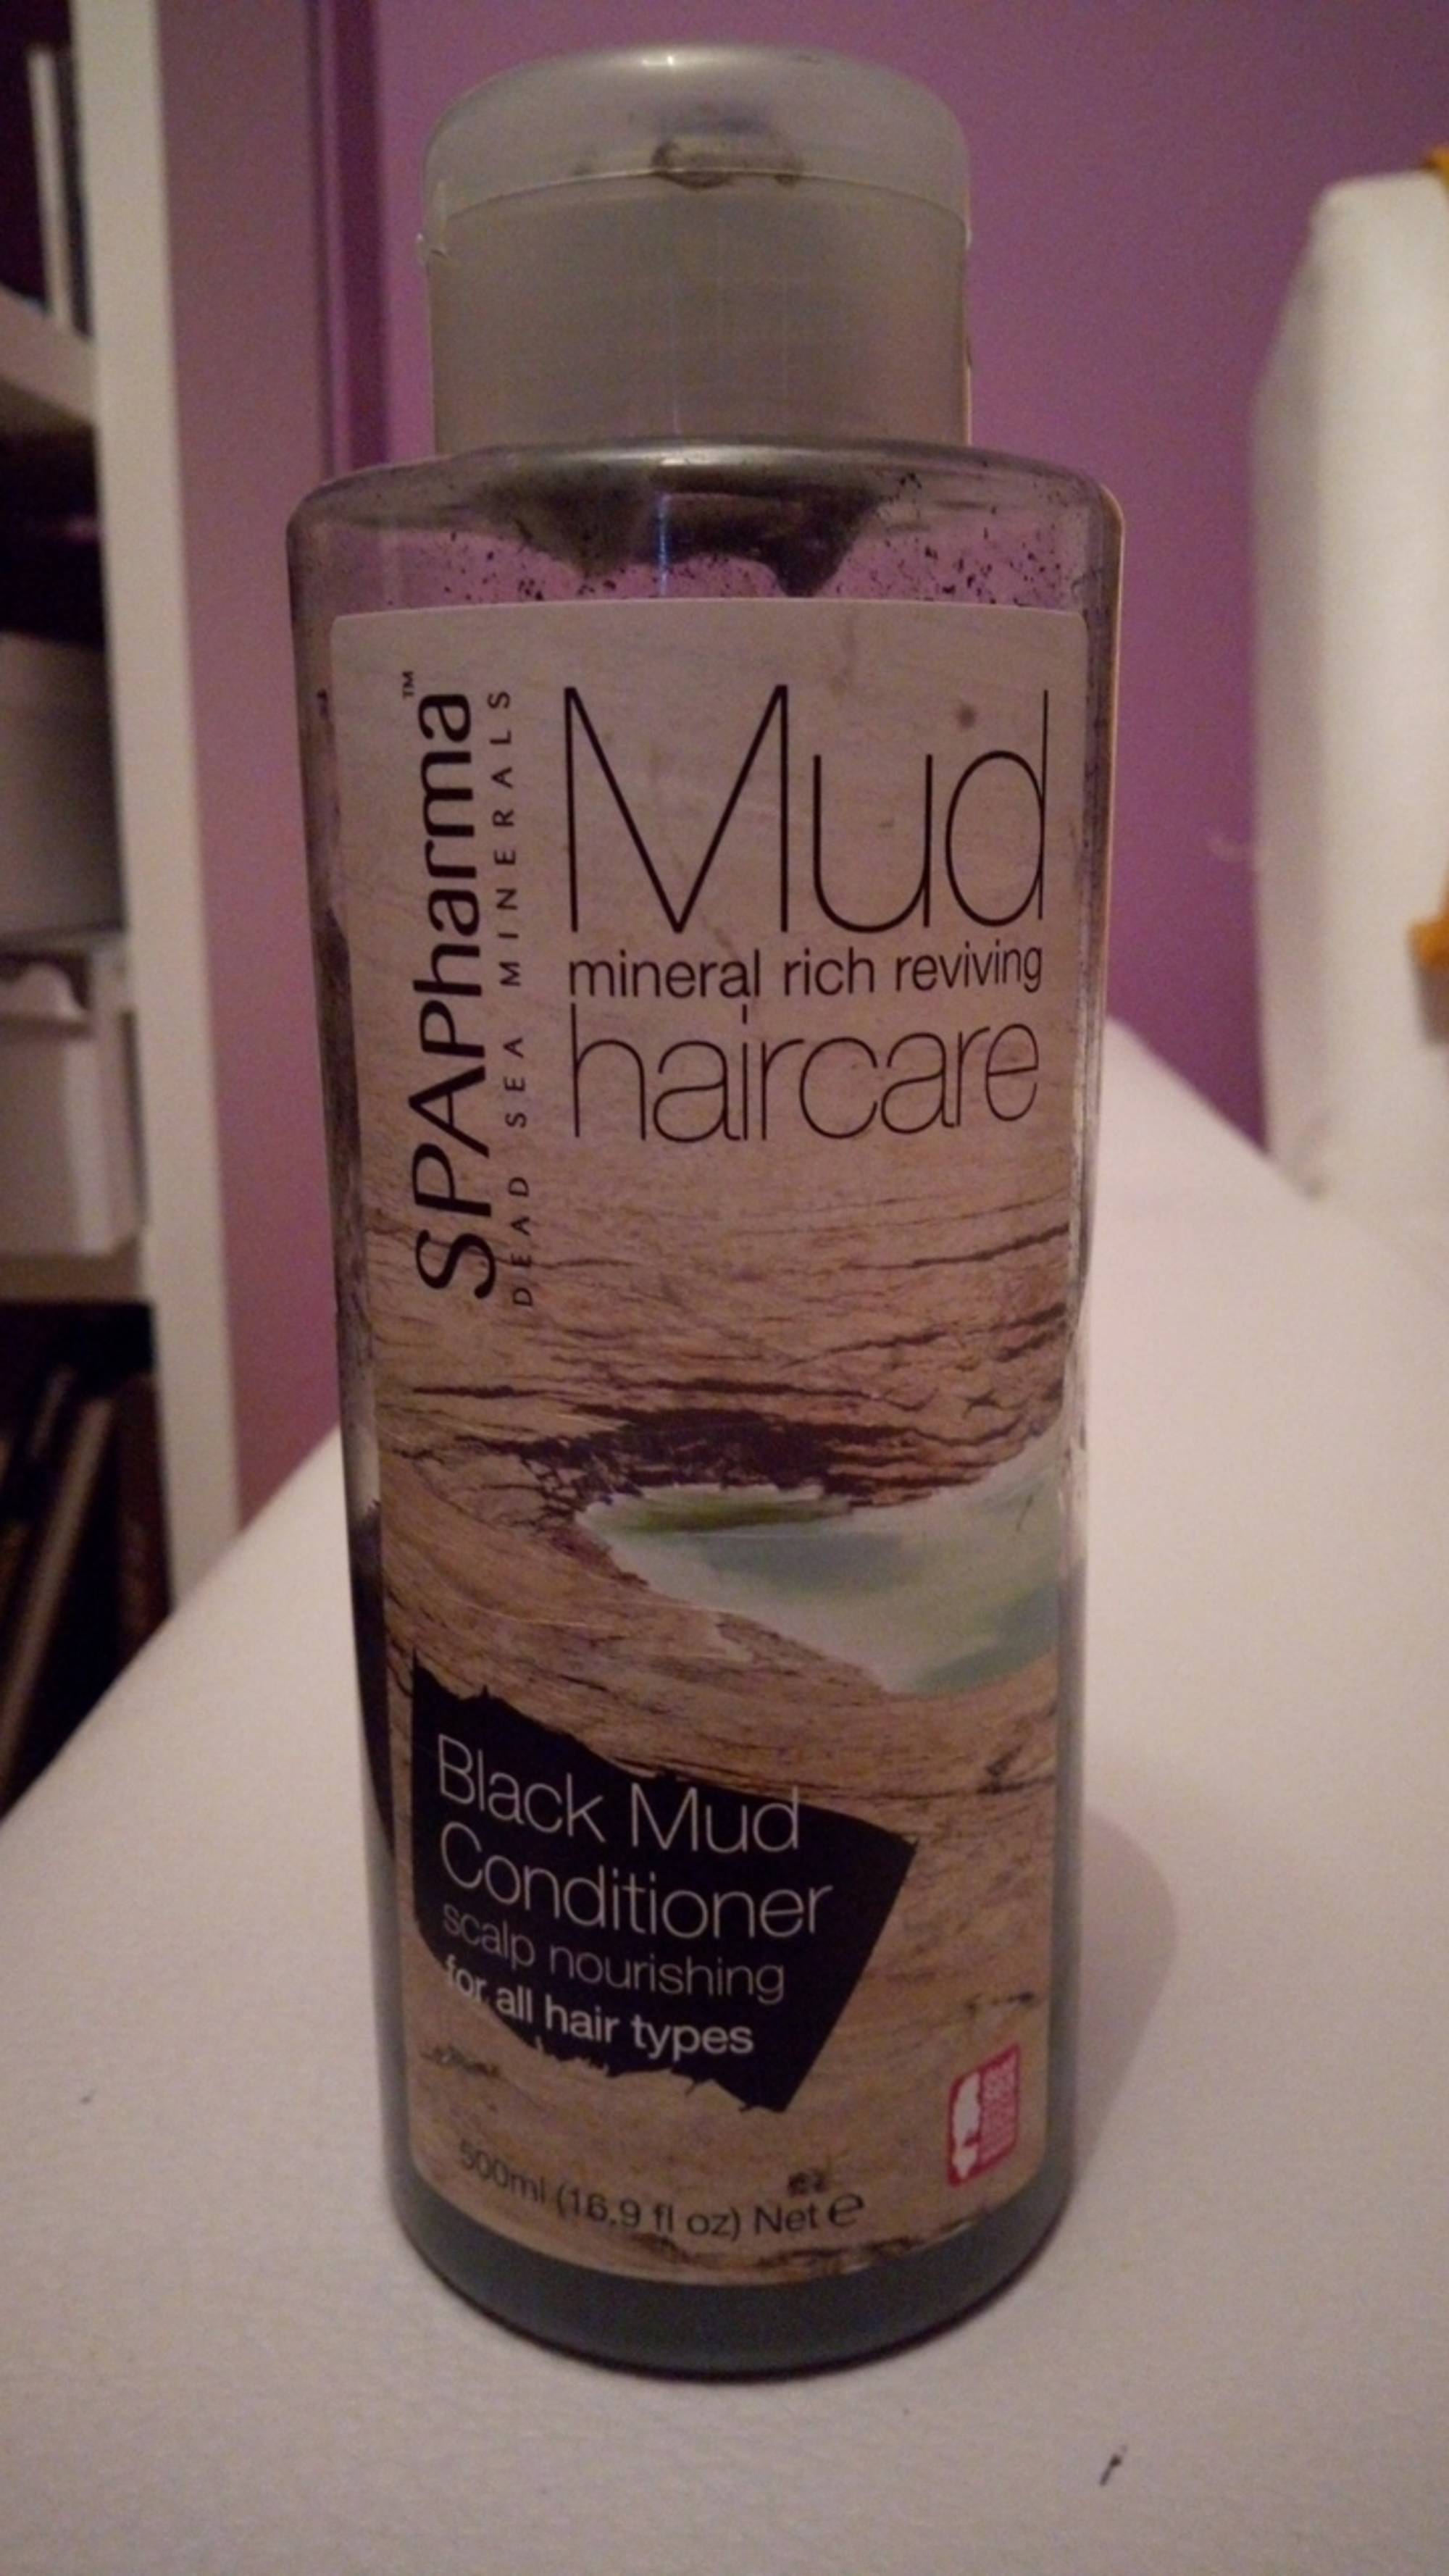 SPA PHARMA - Mud haircare - Black mud conditioner 